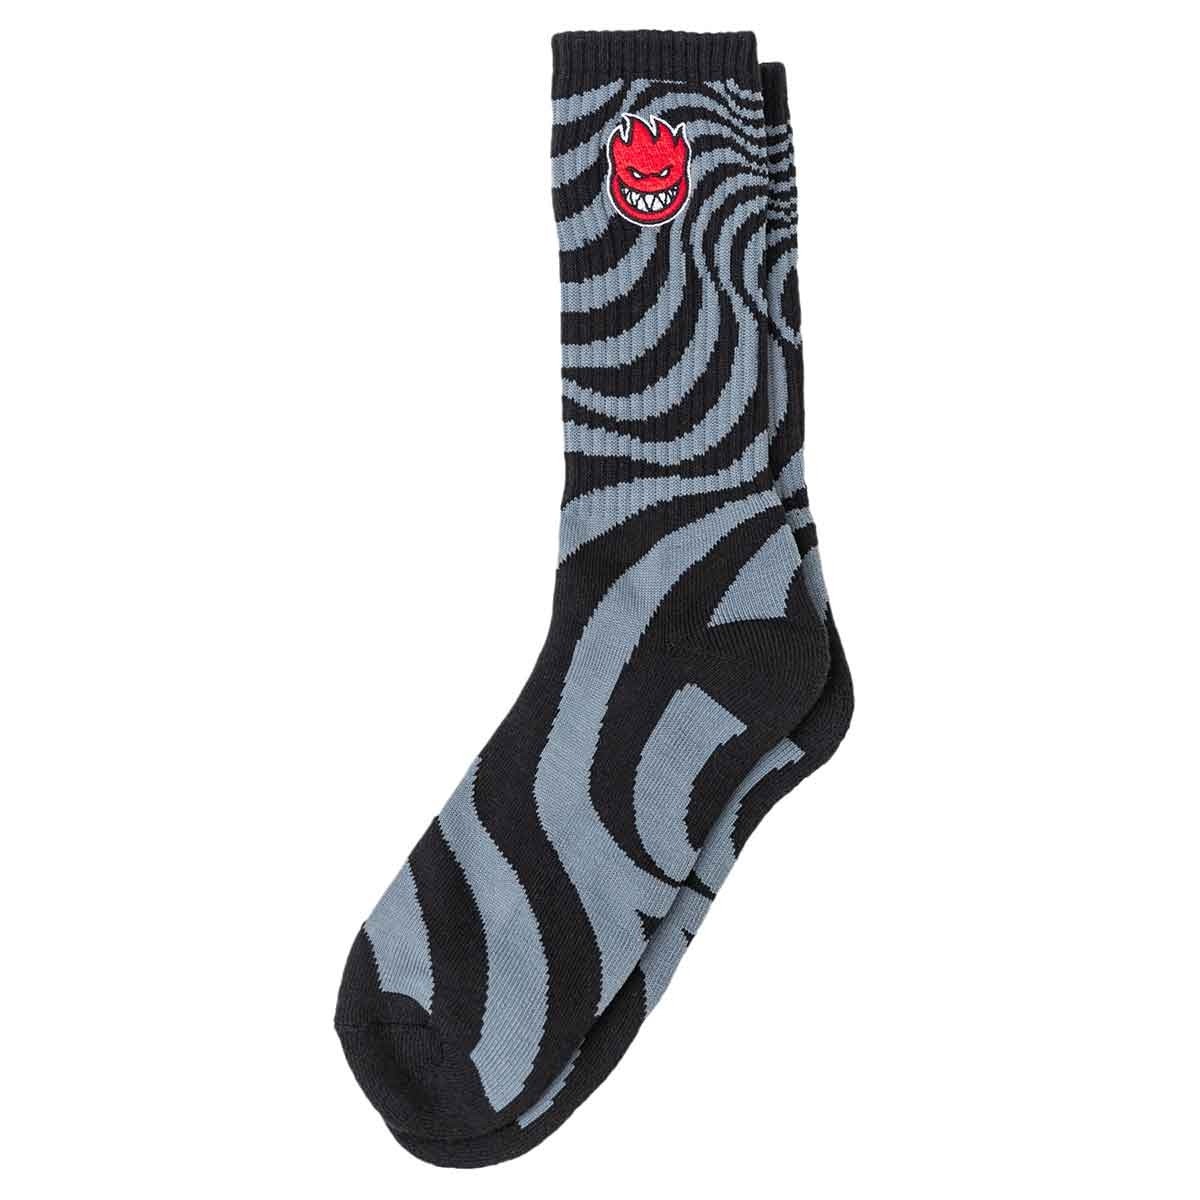 SPITFIRE Swirl Bighead Socks (Black/Grey)